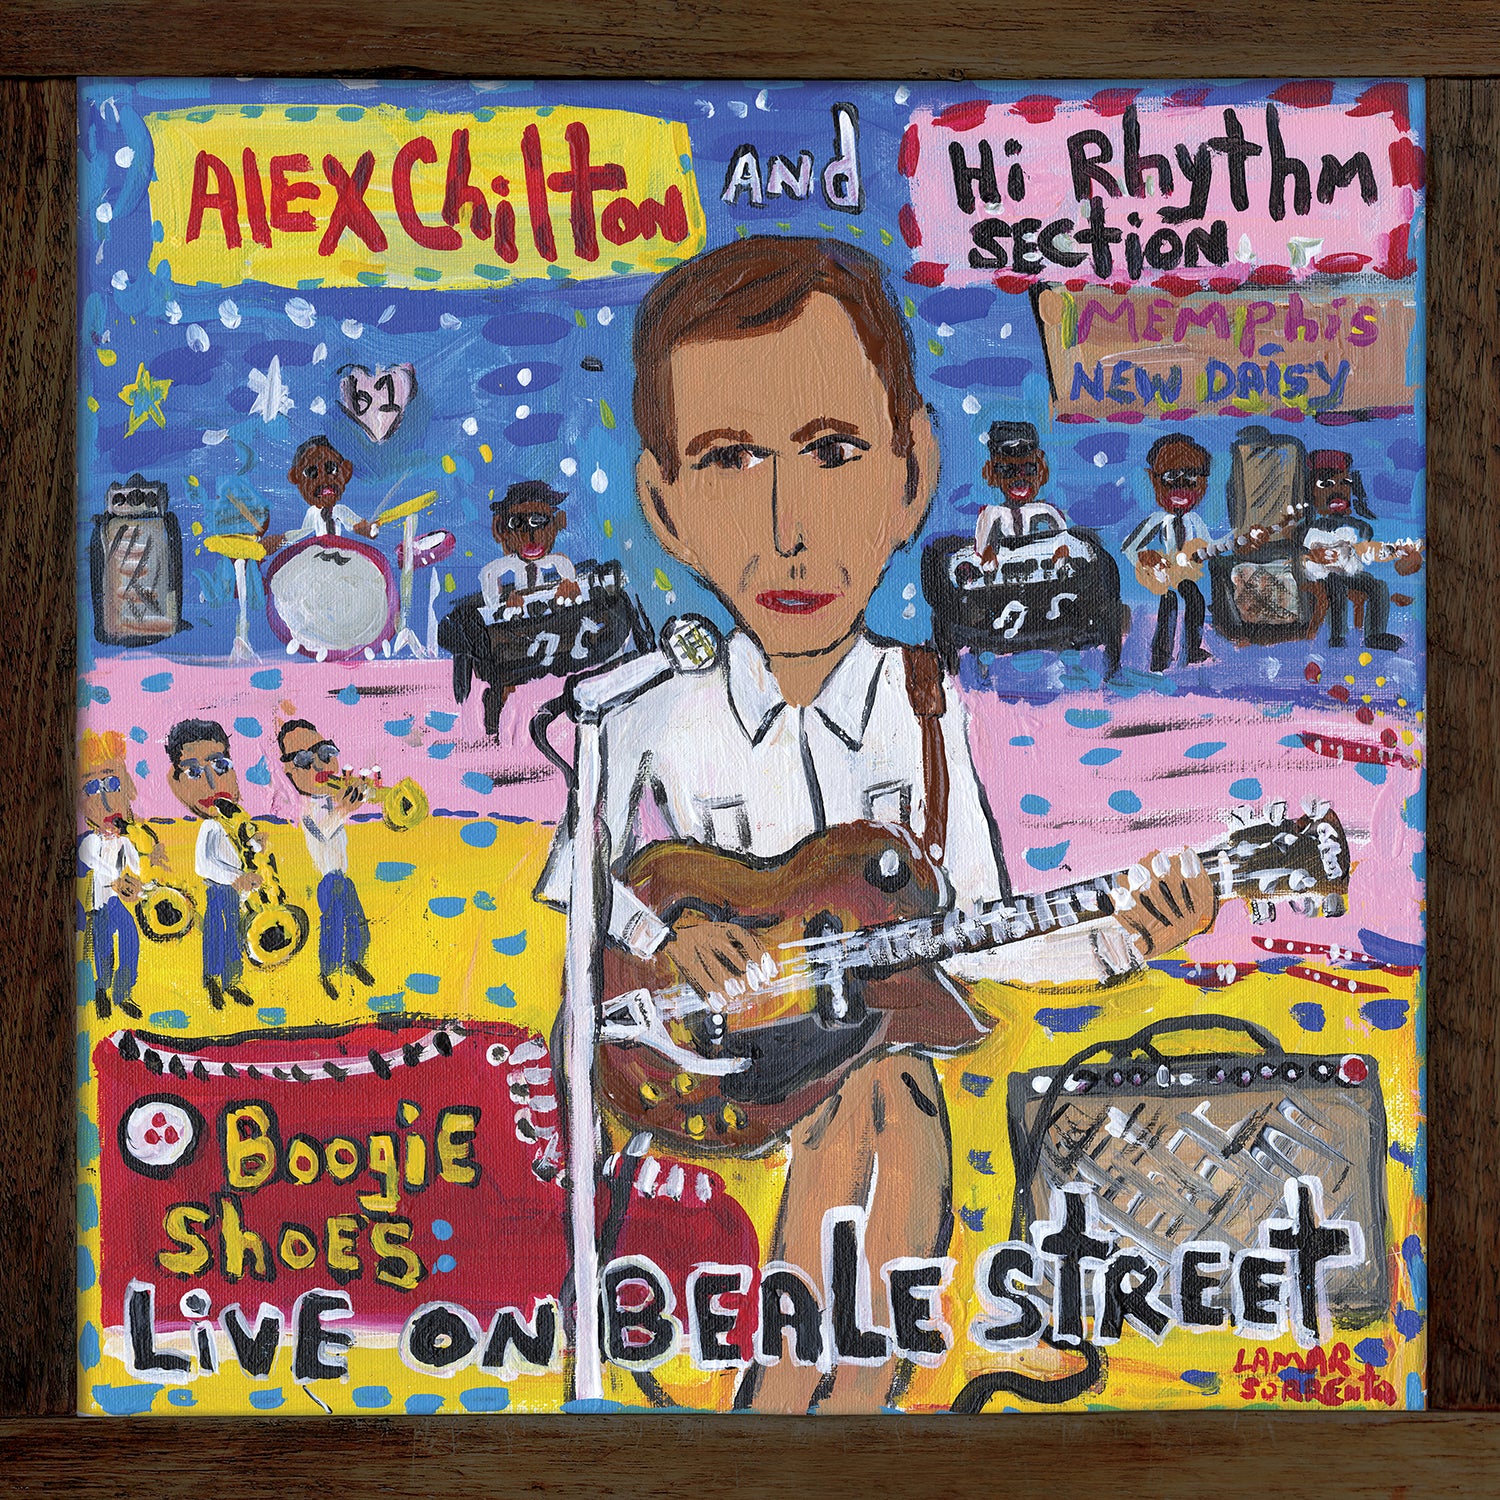 ALEX CHILTON AND HI RHYTHM SECTION - Boogie Shoes: Live On Beale Street - LP - Vinyl